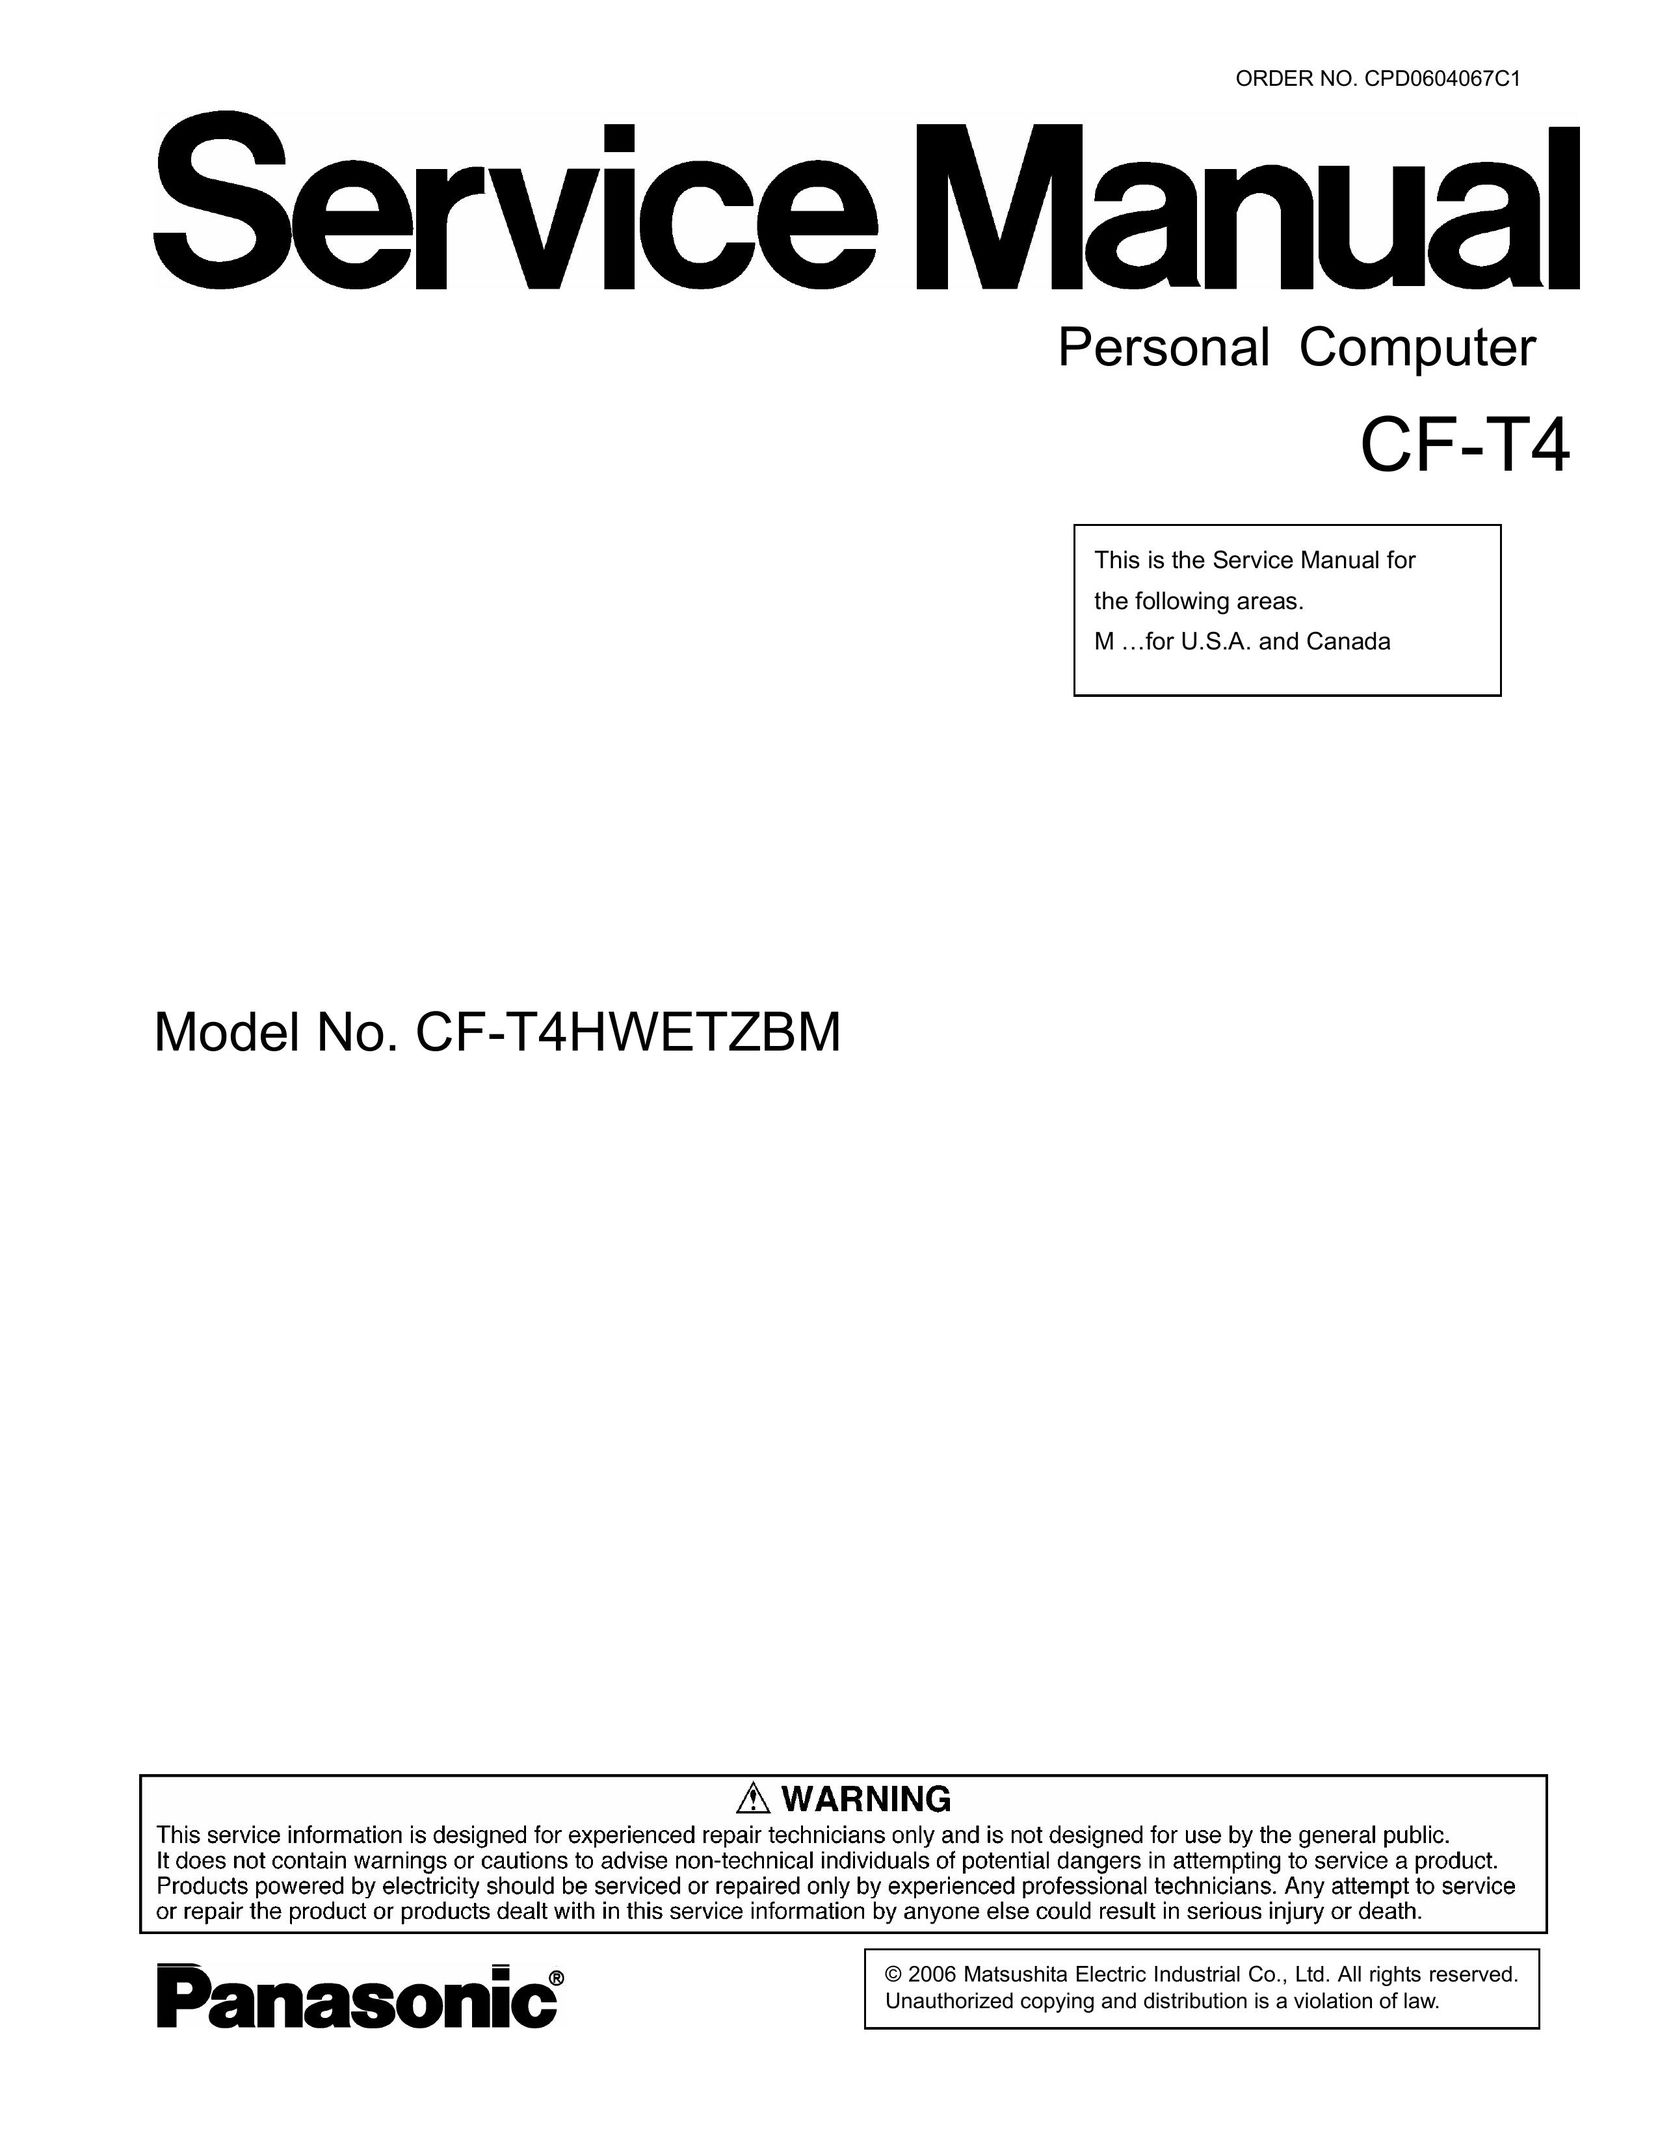 Panasonic CF-T4HWETZBM Personal Computer User Manual